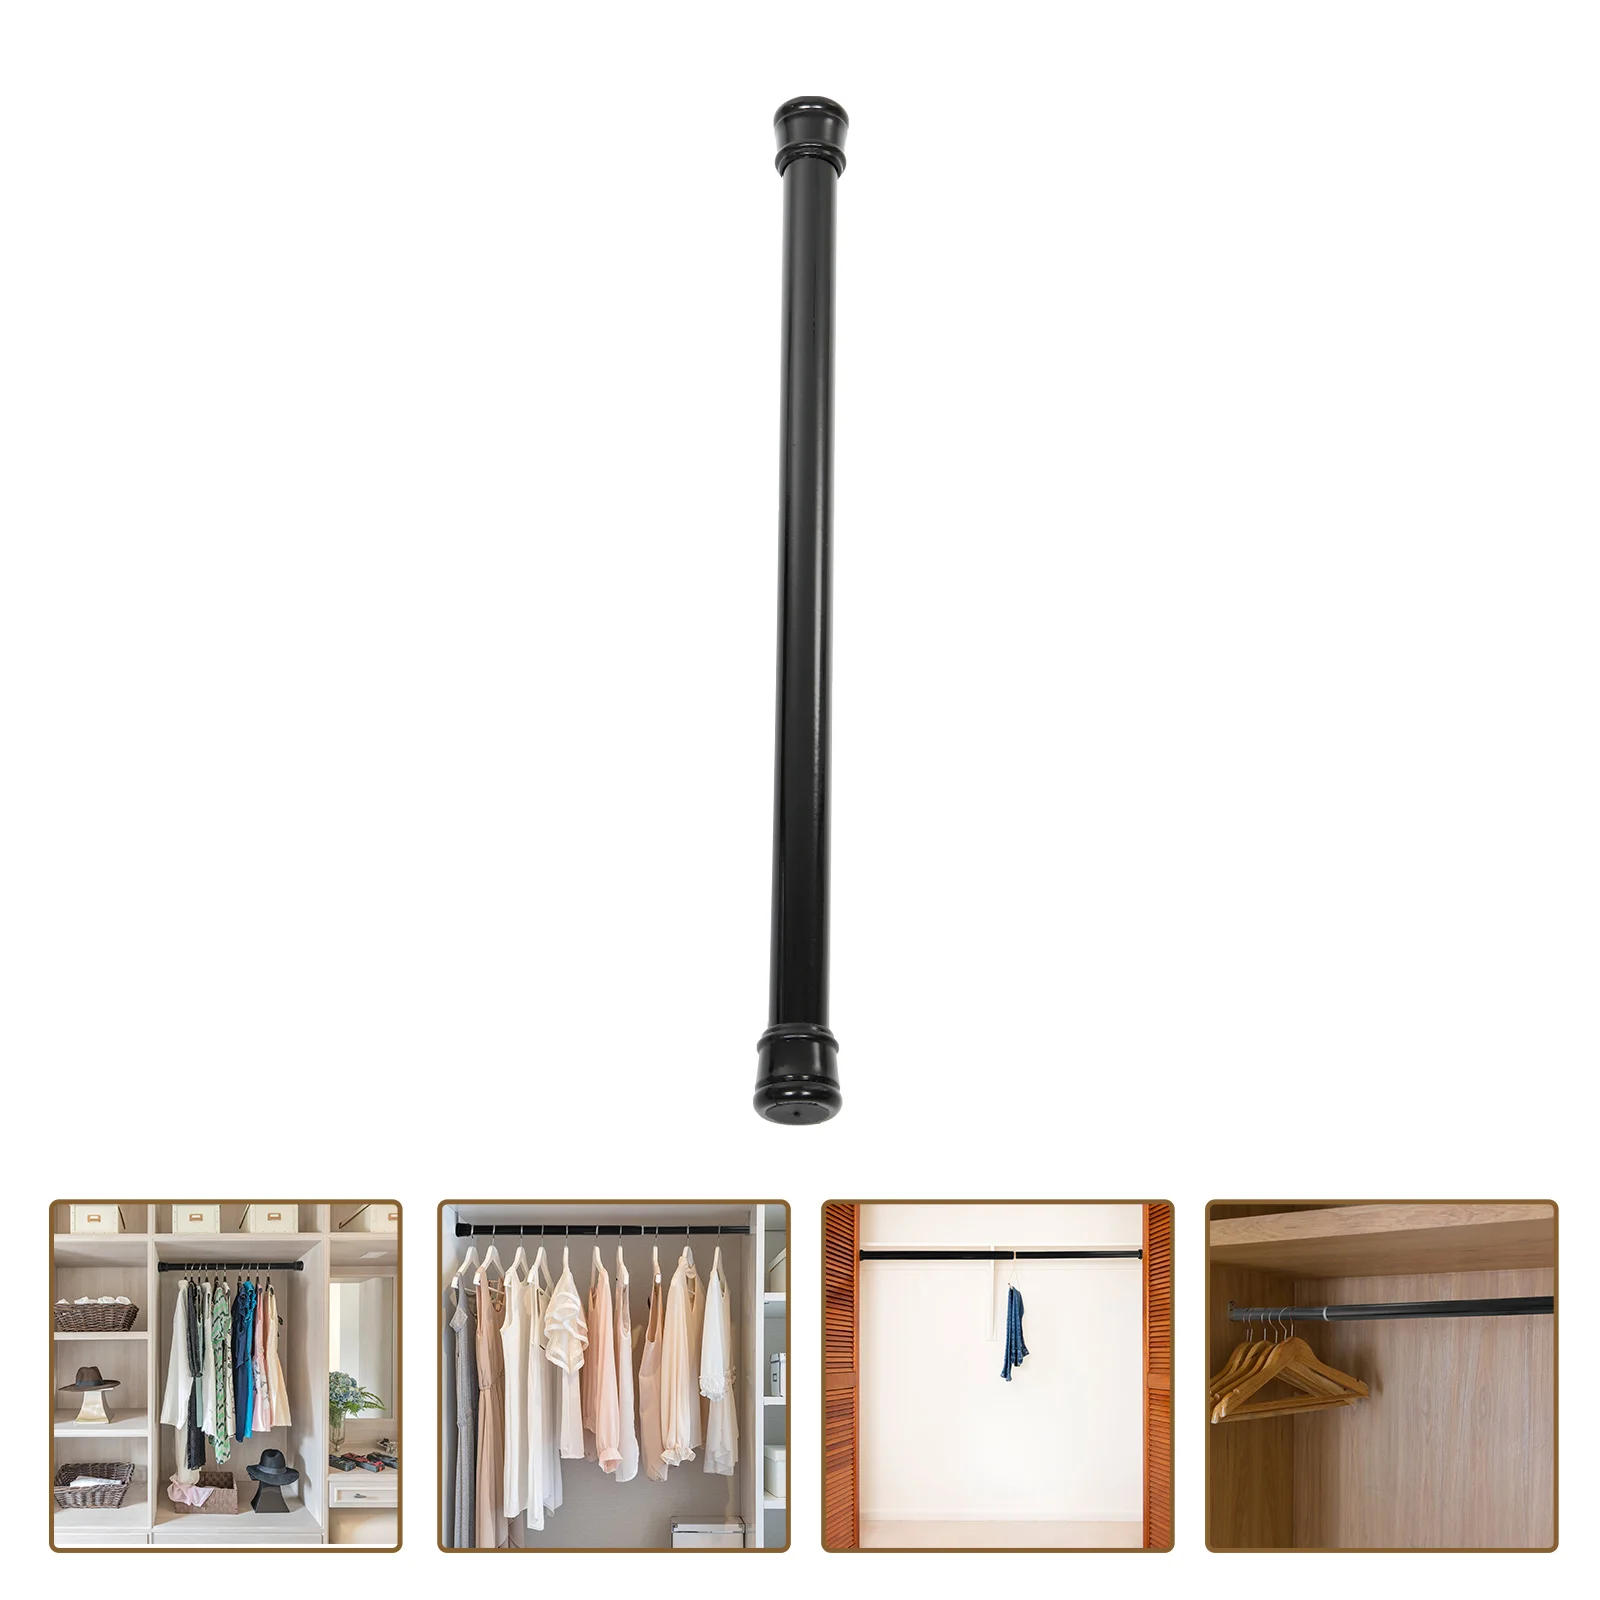 

Wardrobe Pole Adjustable Curtain Rod Brackets Drapery Rods Holders Black Out Bathroom Tension Window Hardware